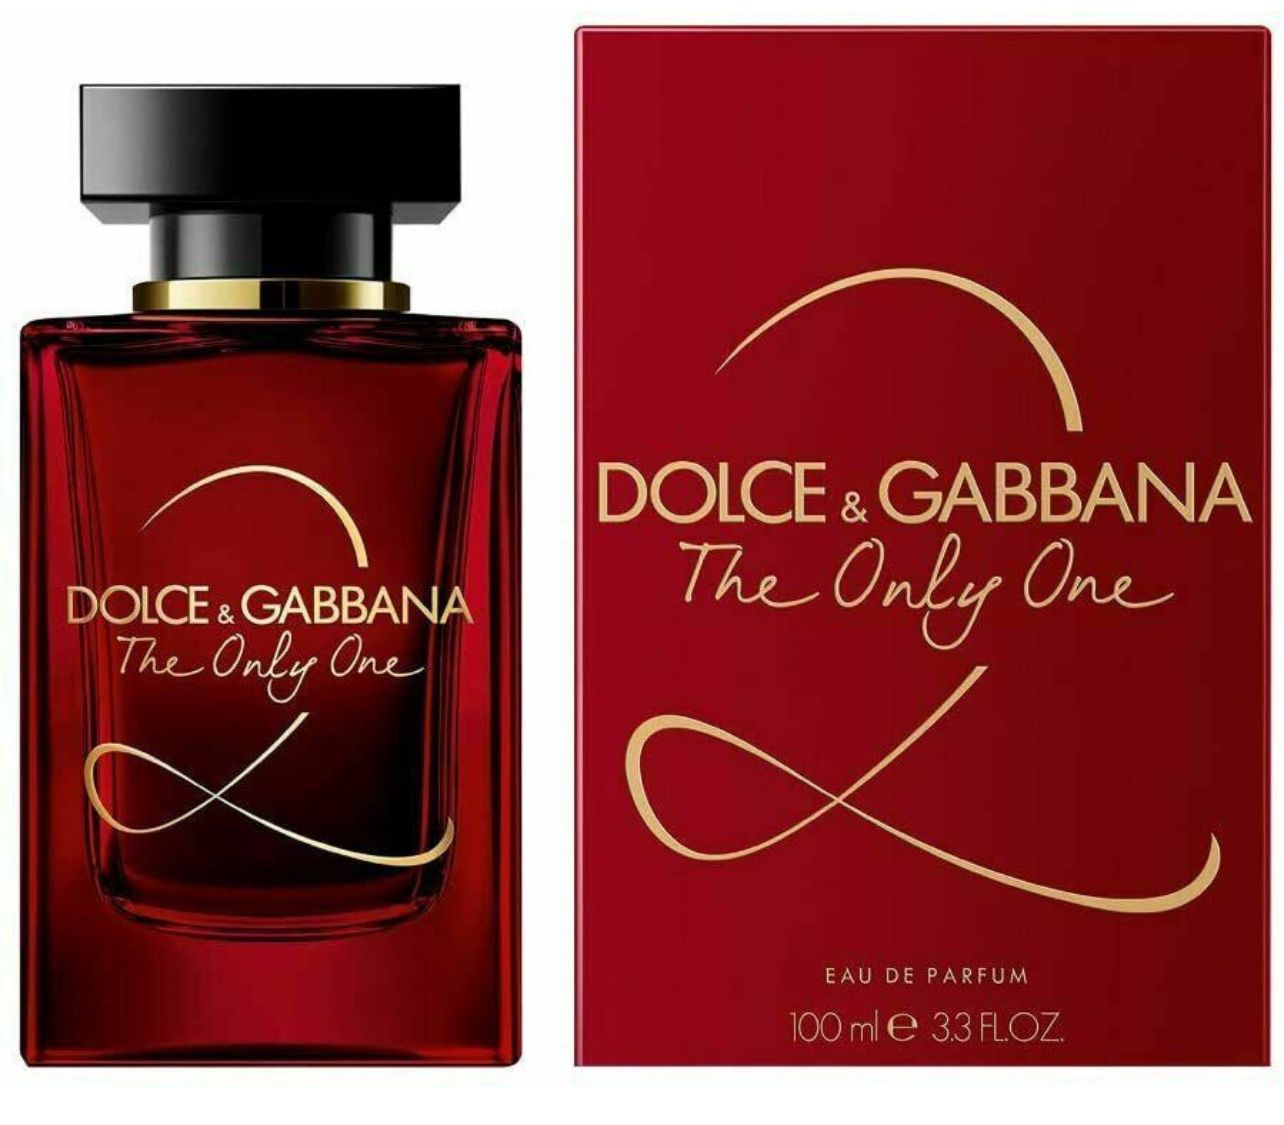 “Radiant Dolce & Gabbana The Only One 2 - 100ml Eau de Parfum for Women - $30”